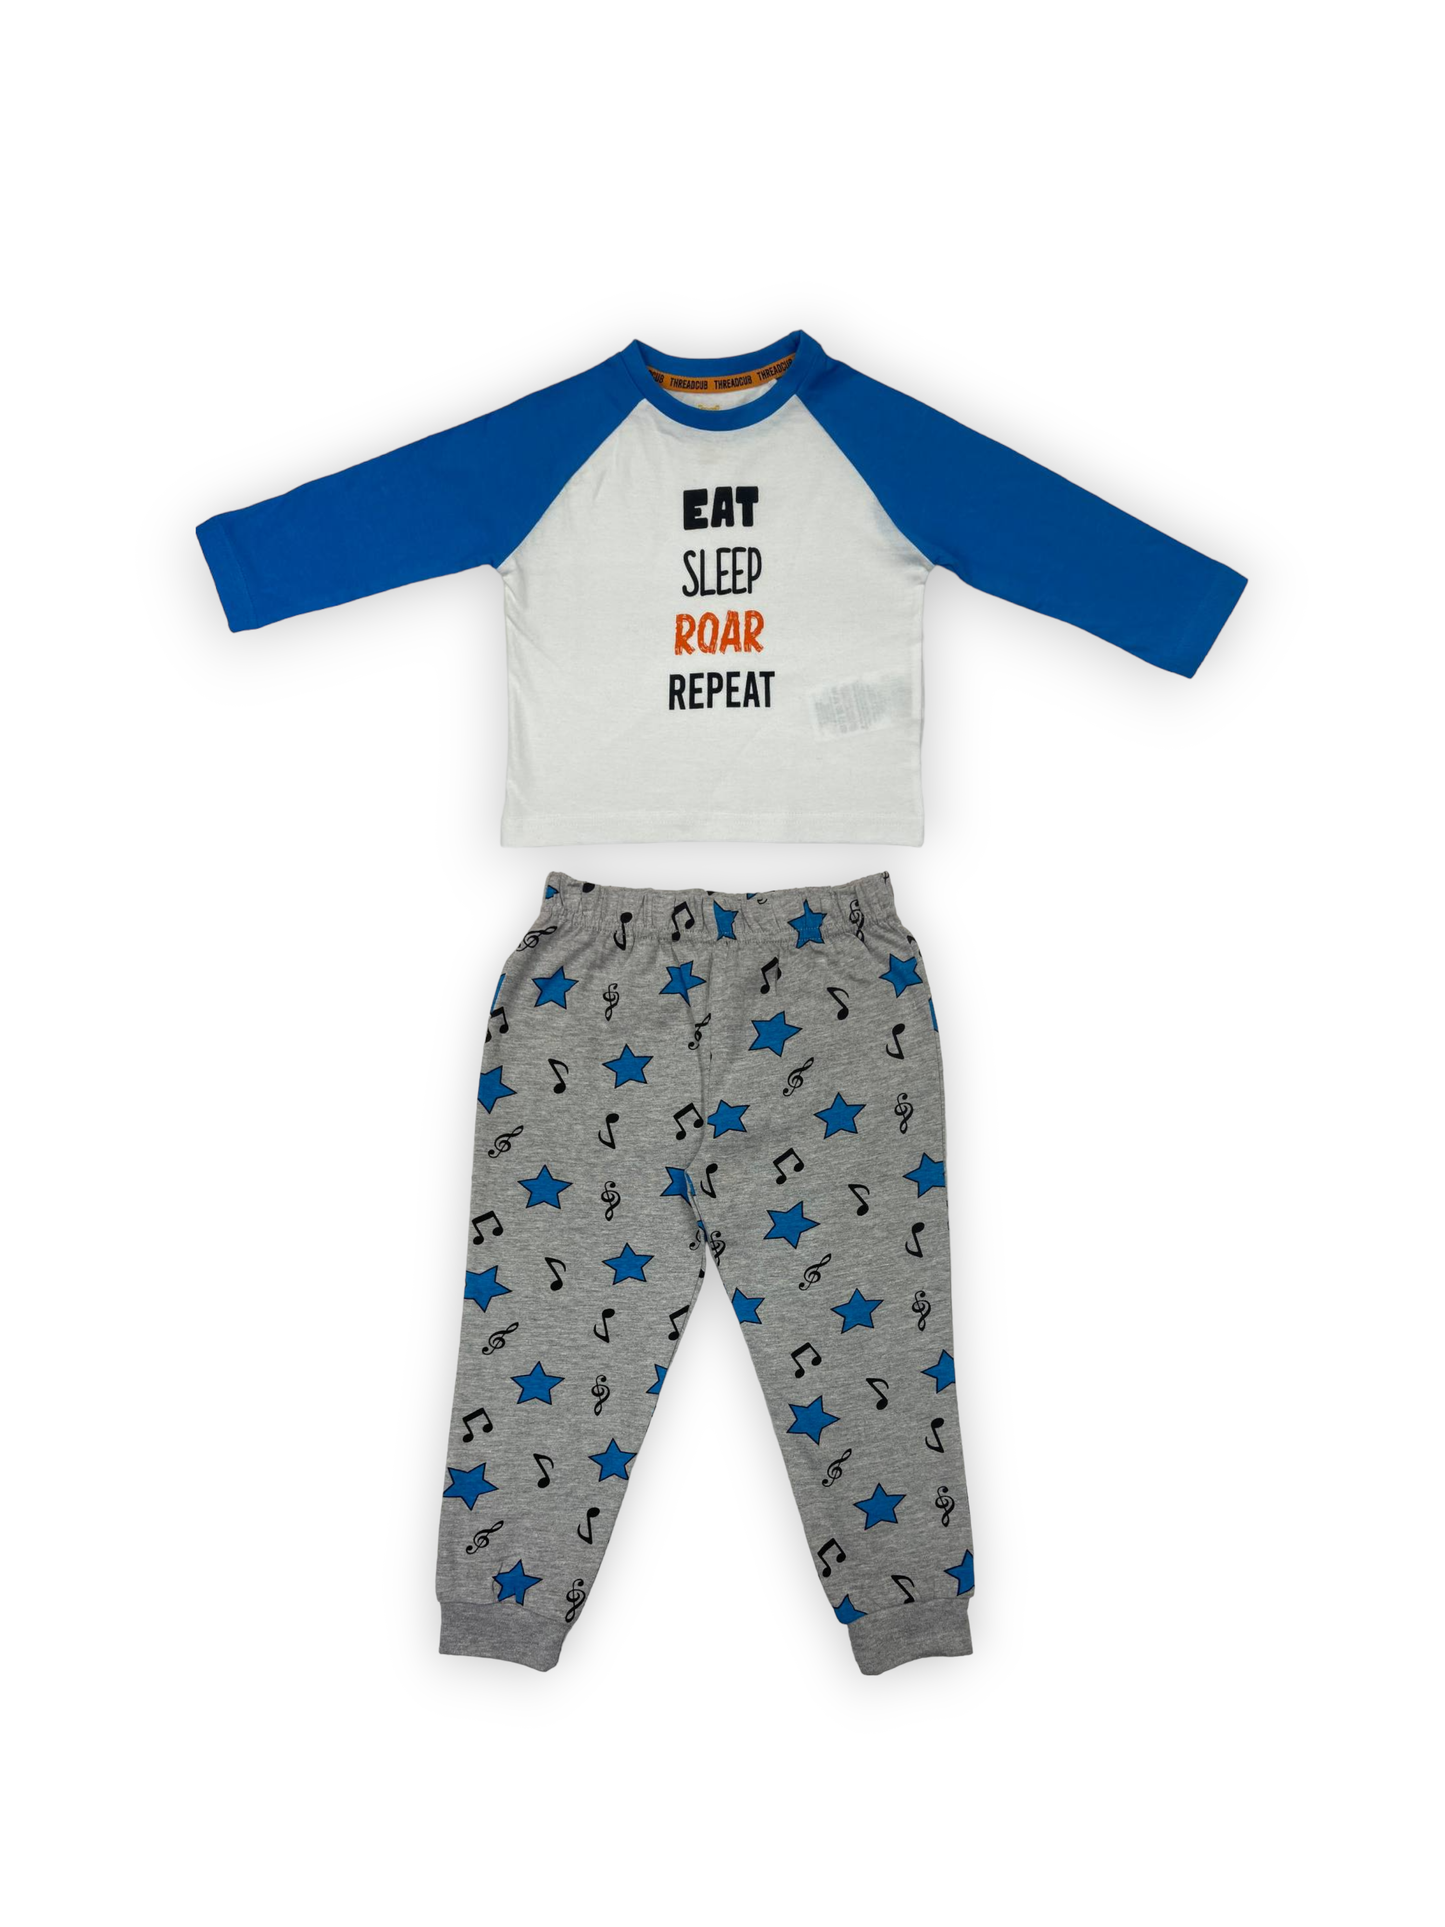 Eat Sleep Repeat Pyjama T-Shirt Set ( Pack of 1 )